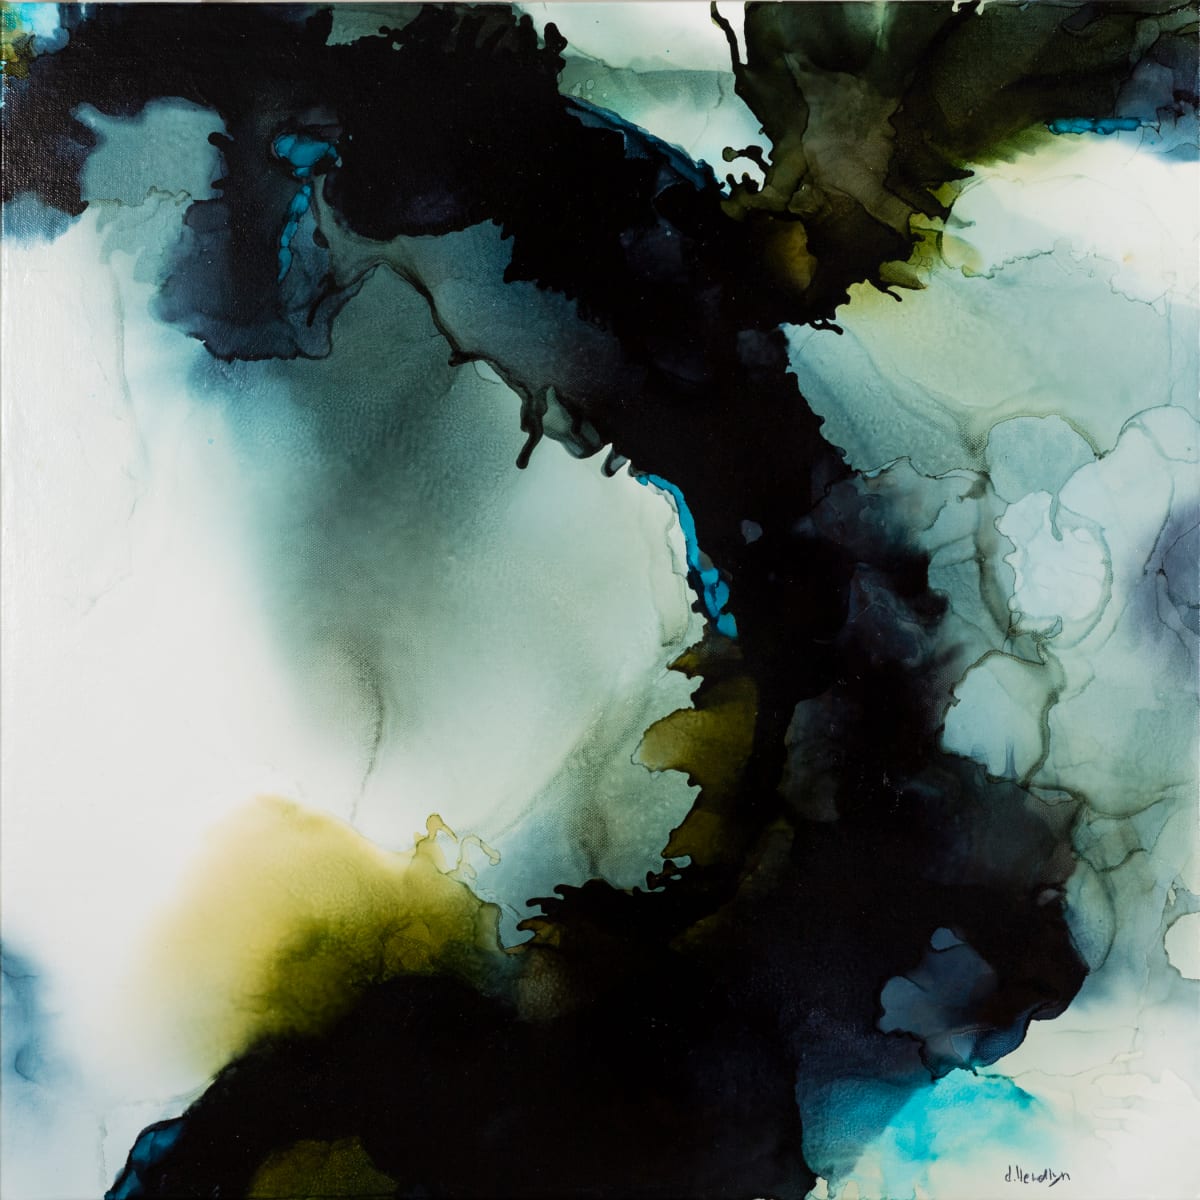 Juniper Noir by Deborah Llewellyn  Image: 24"x24" - mixed media on canvas